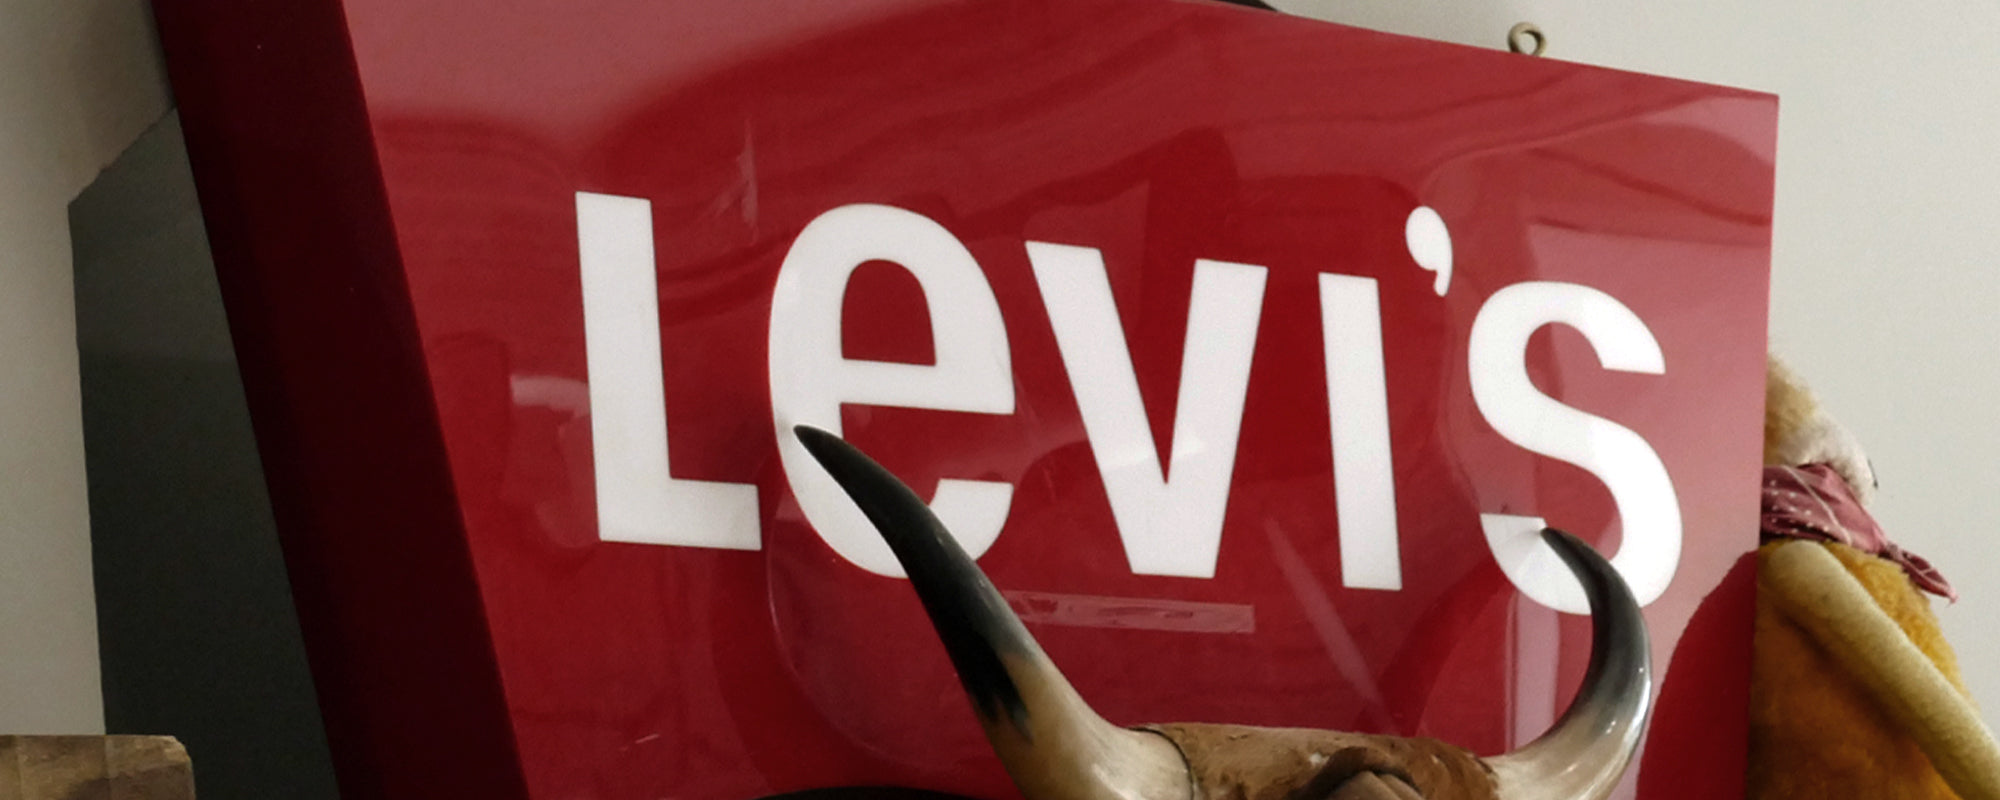 Levis Vintage Clothing LVC  American Classics – American Classics London